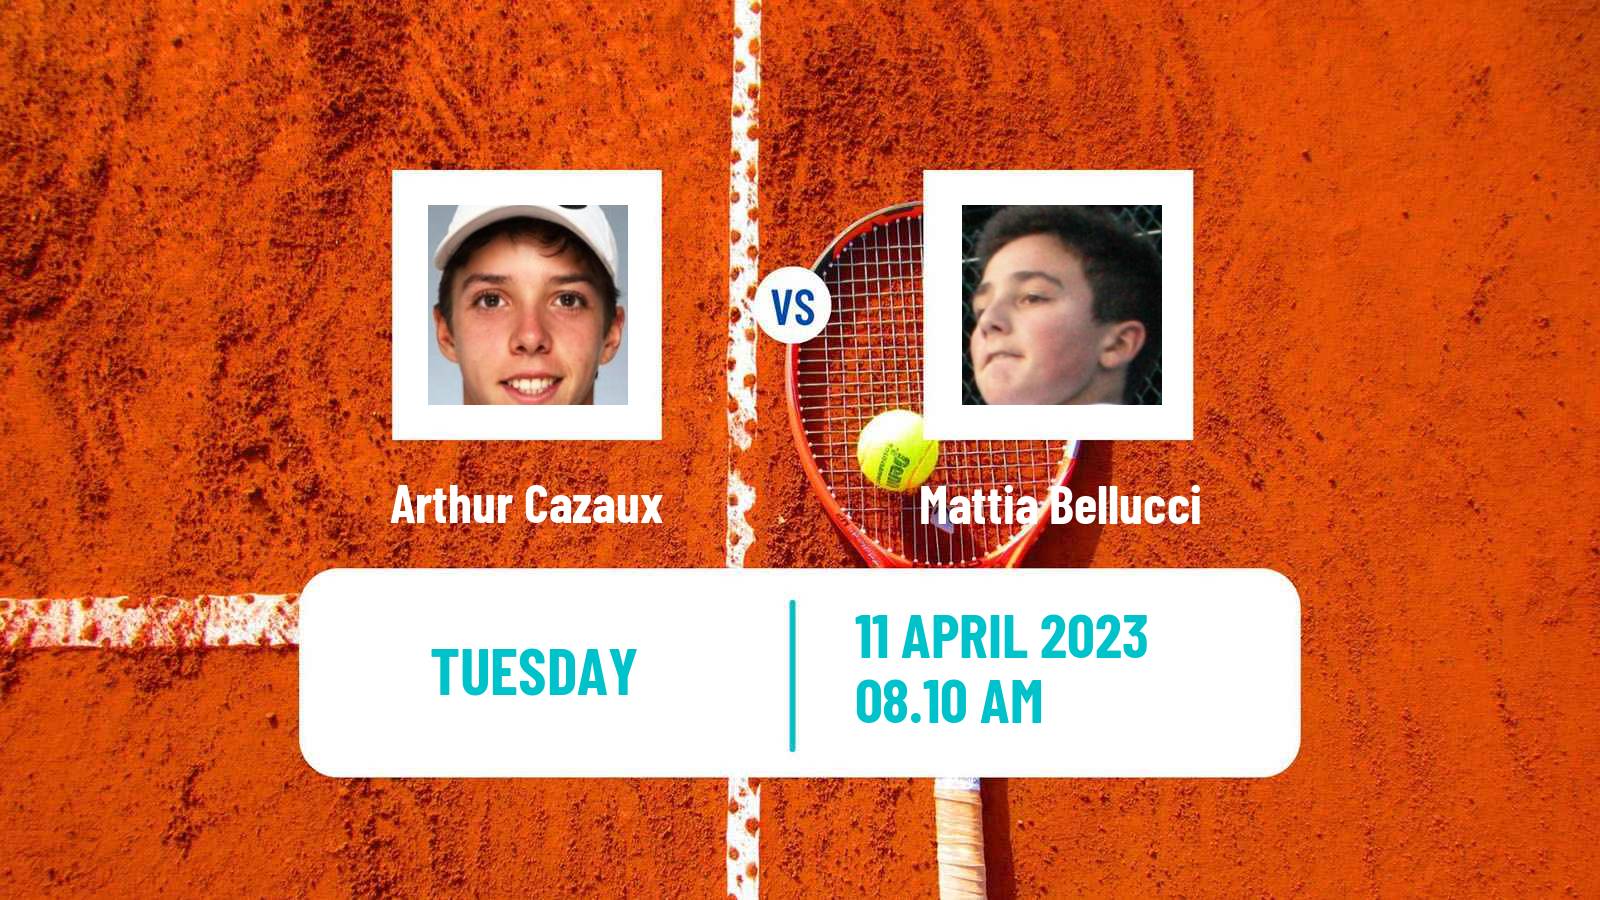 Tennis ATP Challenger Arthur Cazaux - Mattia Bellucci